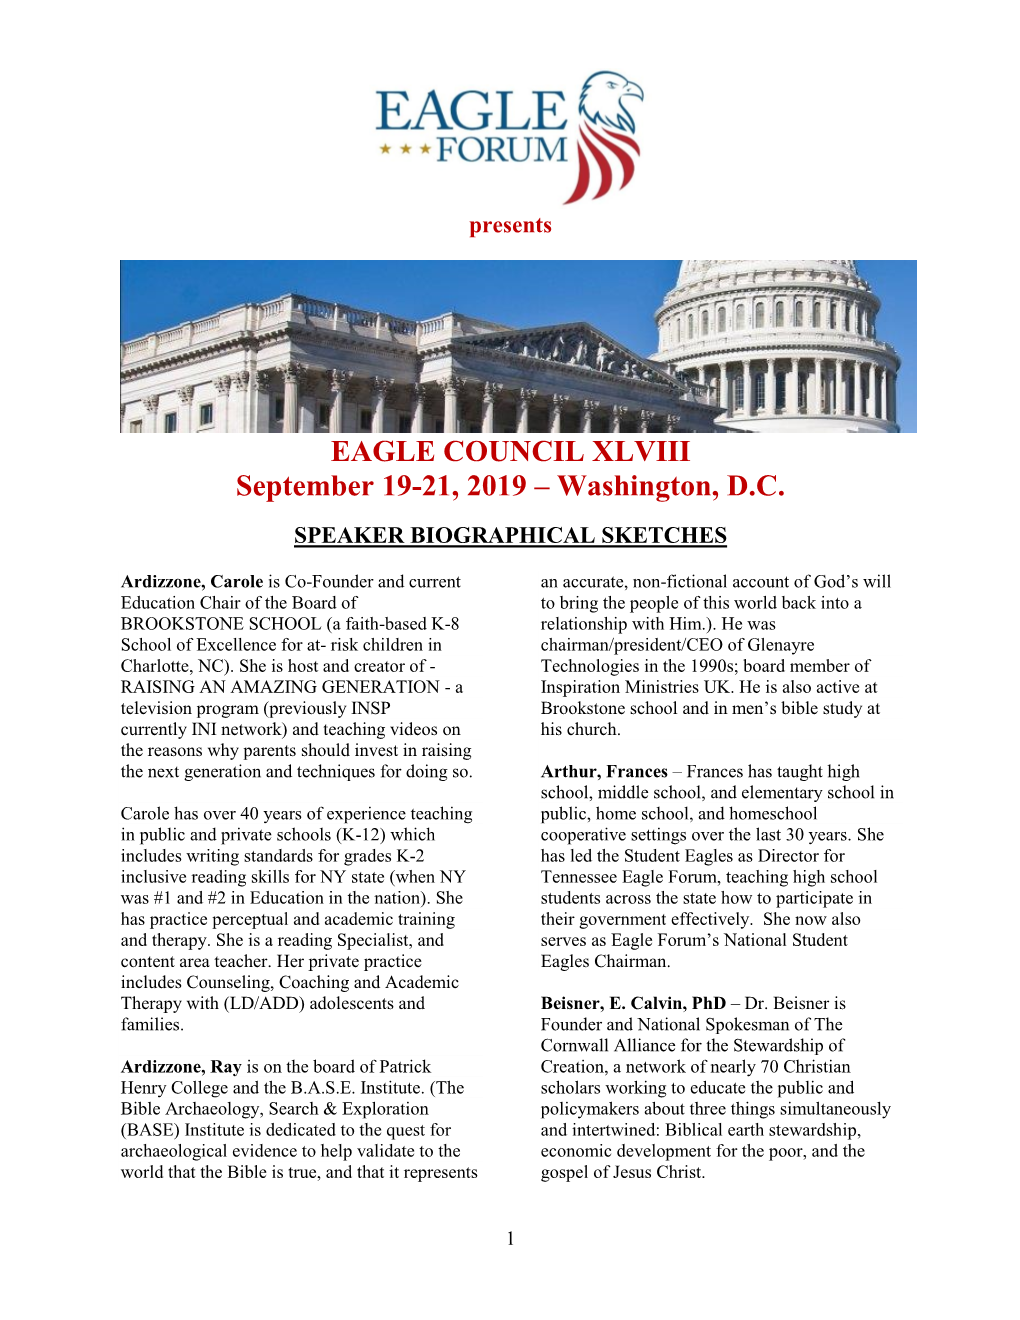 EAGLE COUNCIL XLVIII September 19-21, 2019 – Washington, D.C